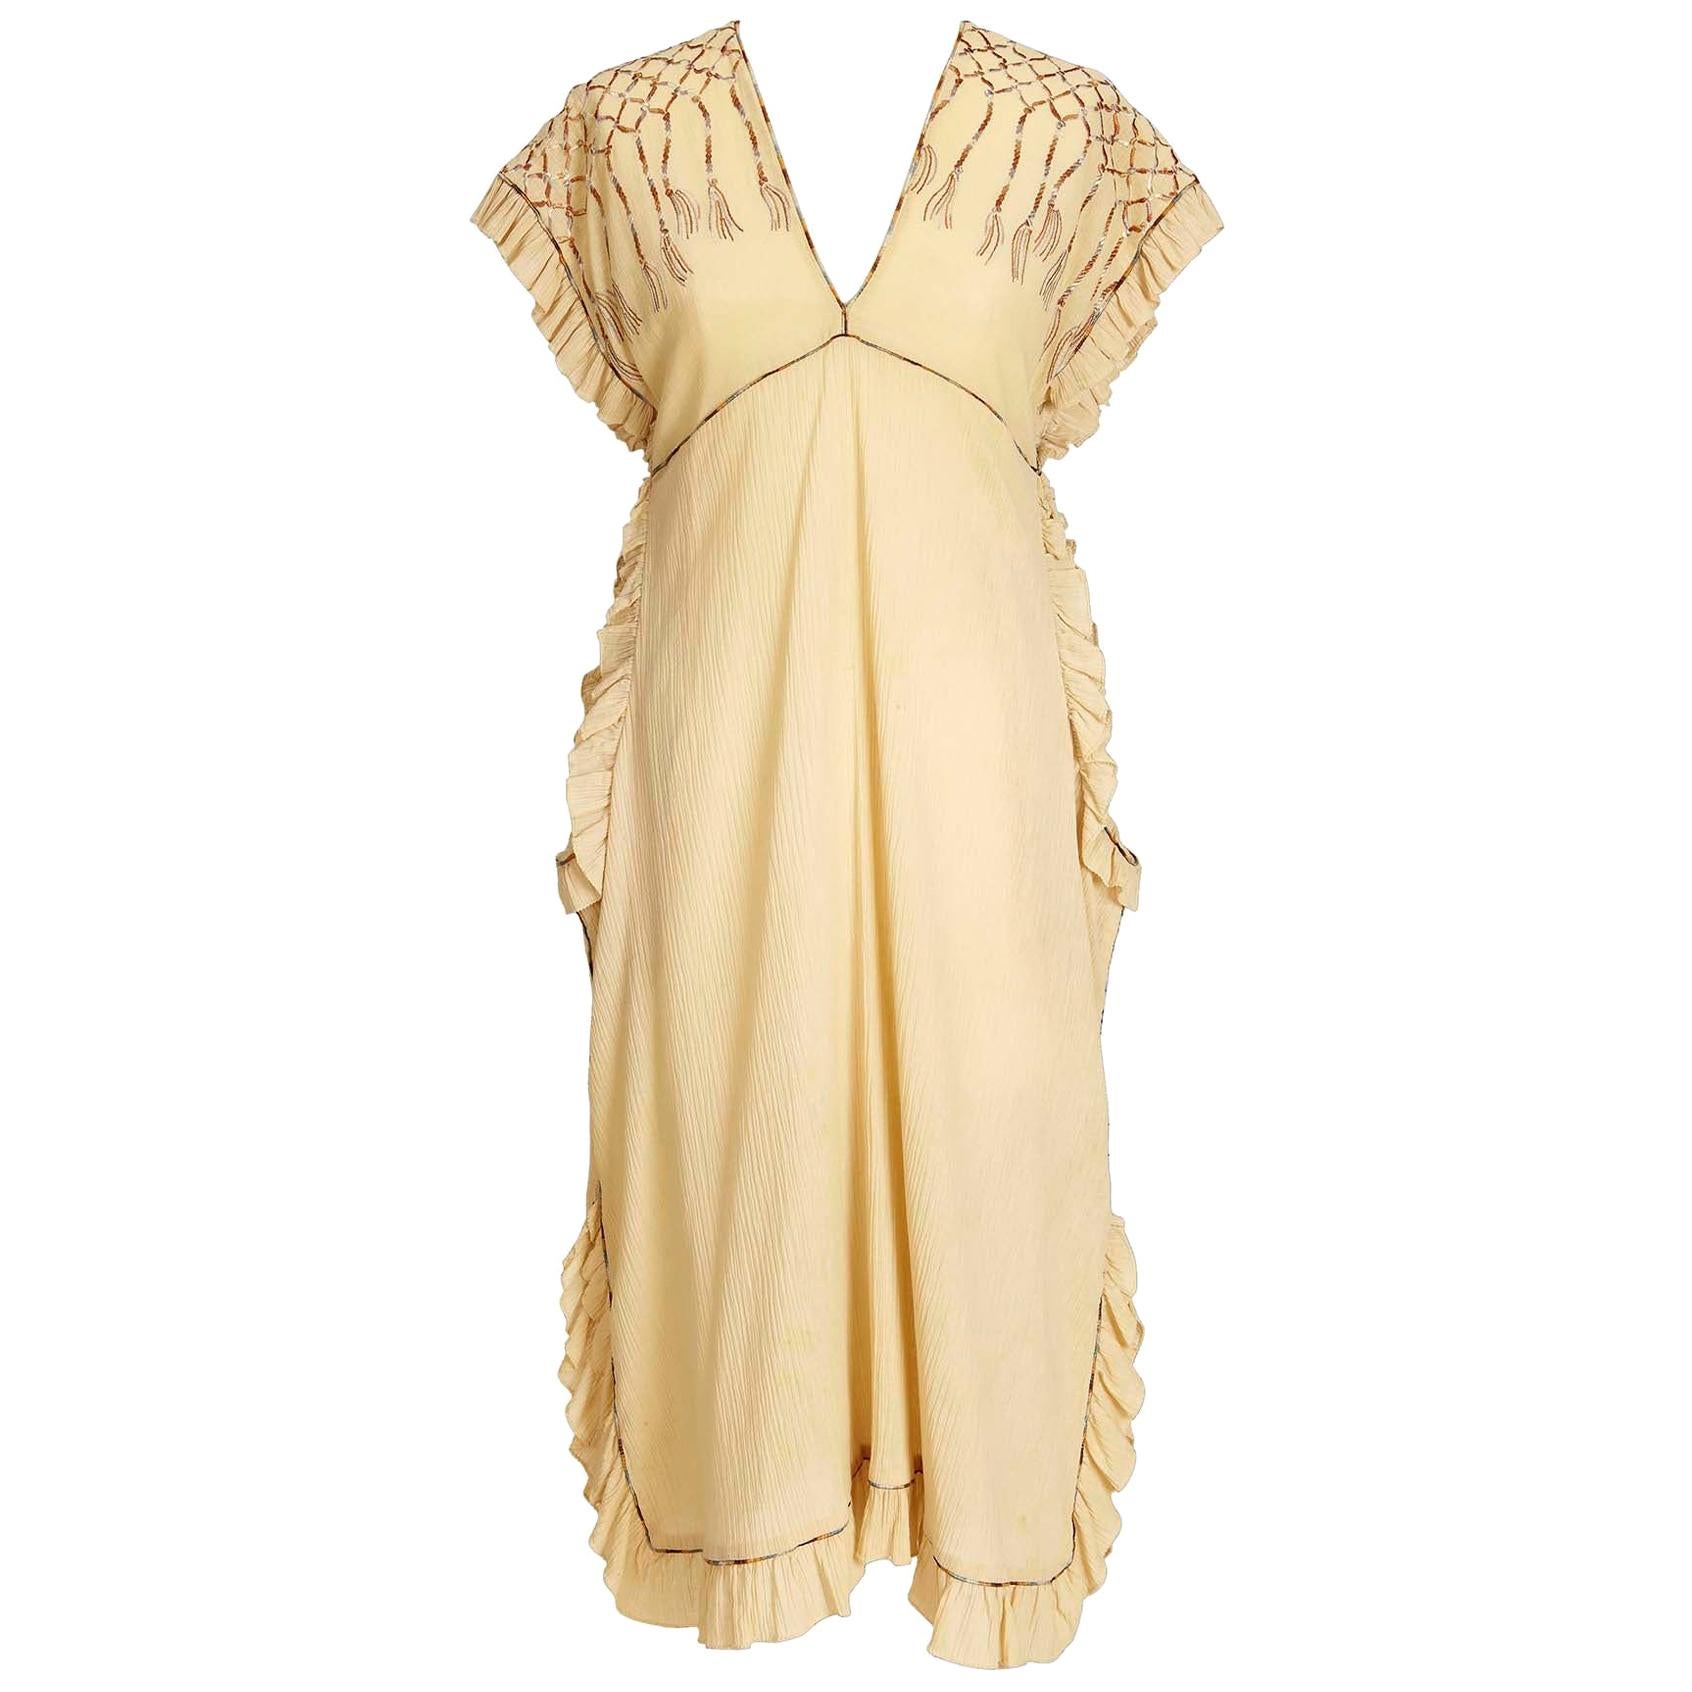 Janice Wainwright 1970s Vintage Embroidered Tassel Cotton Frill Side Tie Dress 